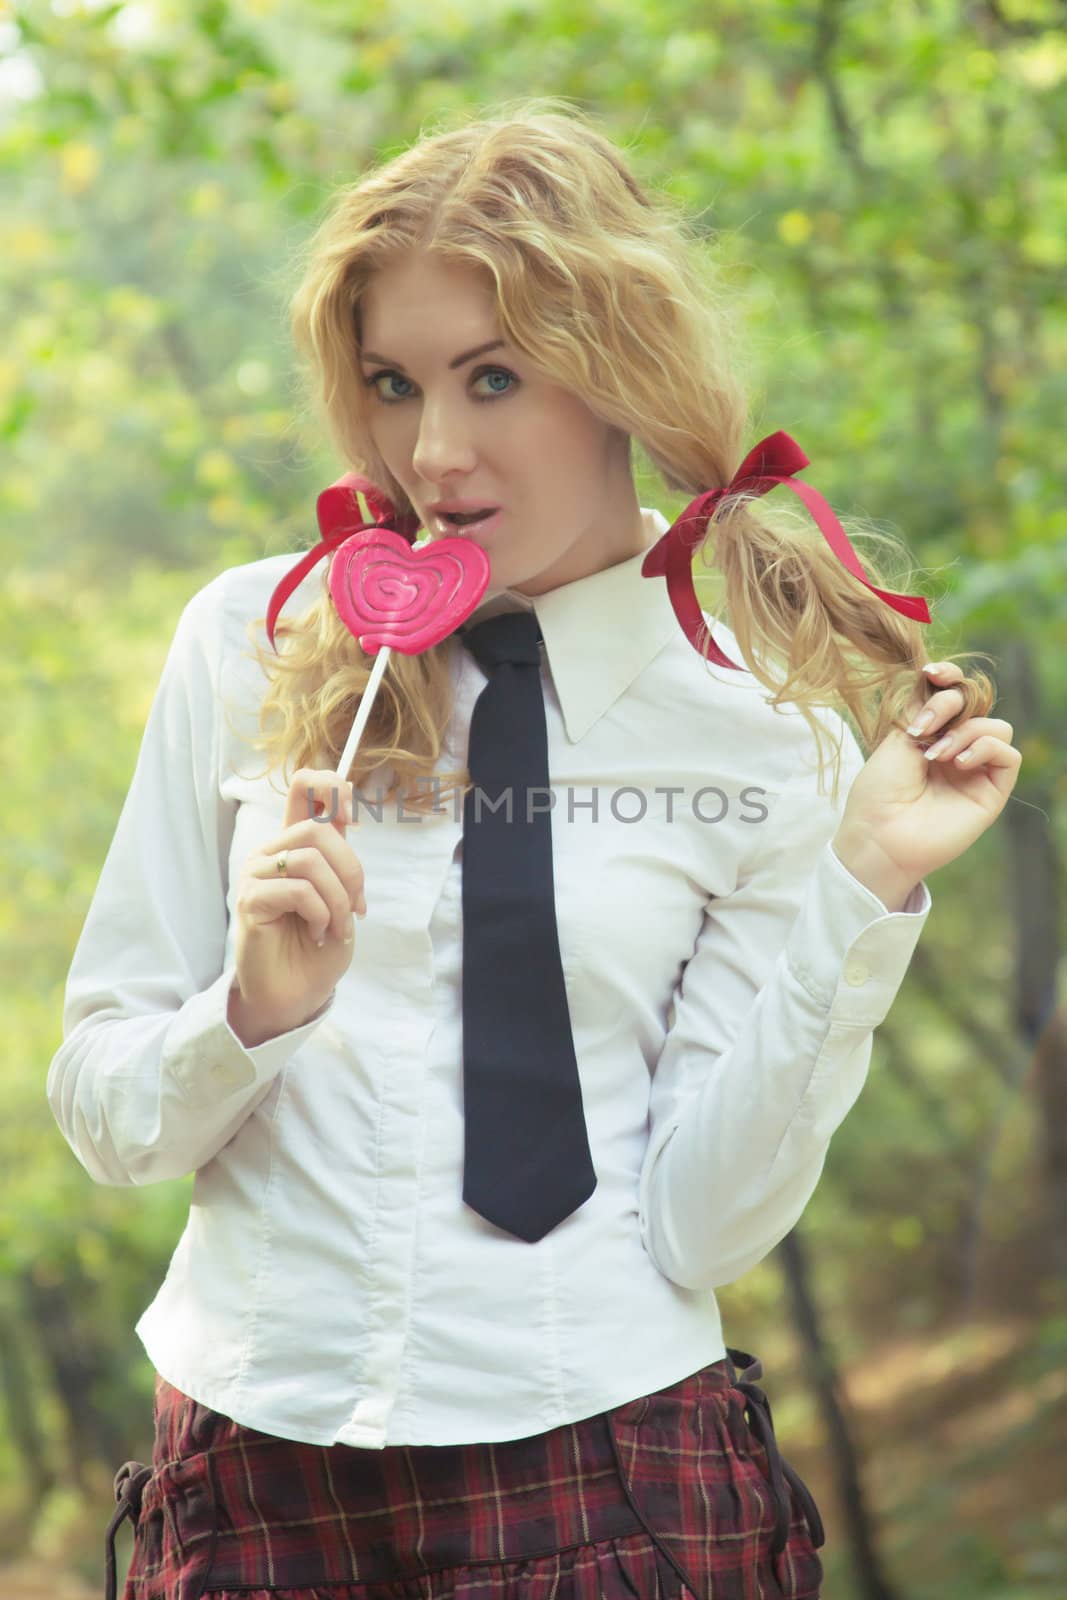 Schoolgirl in tie with lollipop by Angel_a